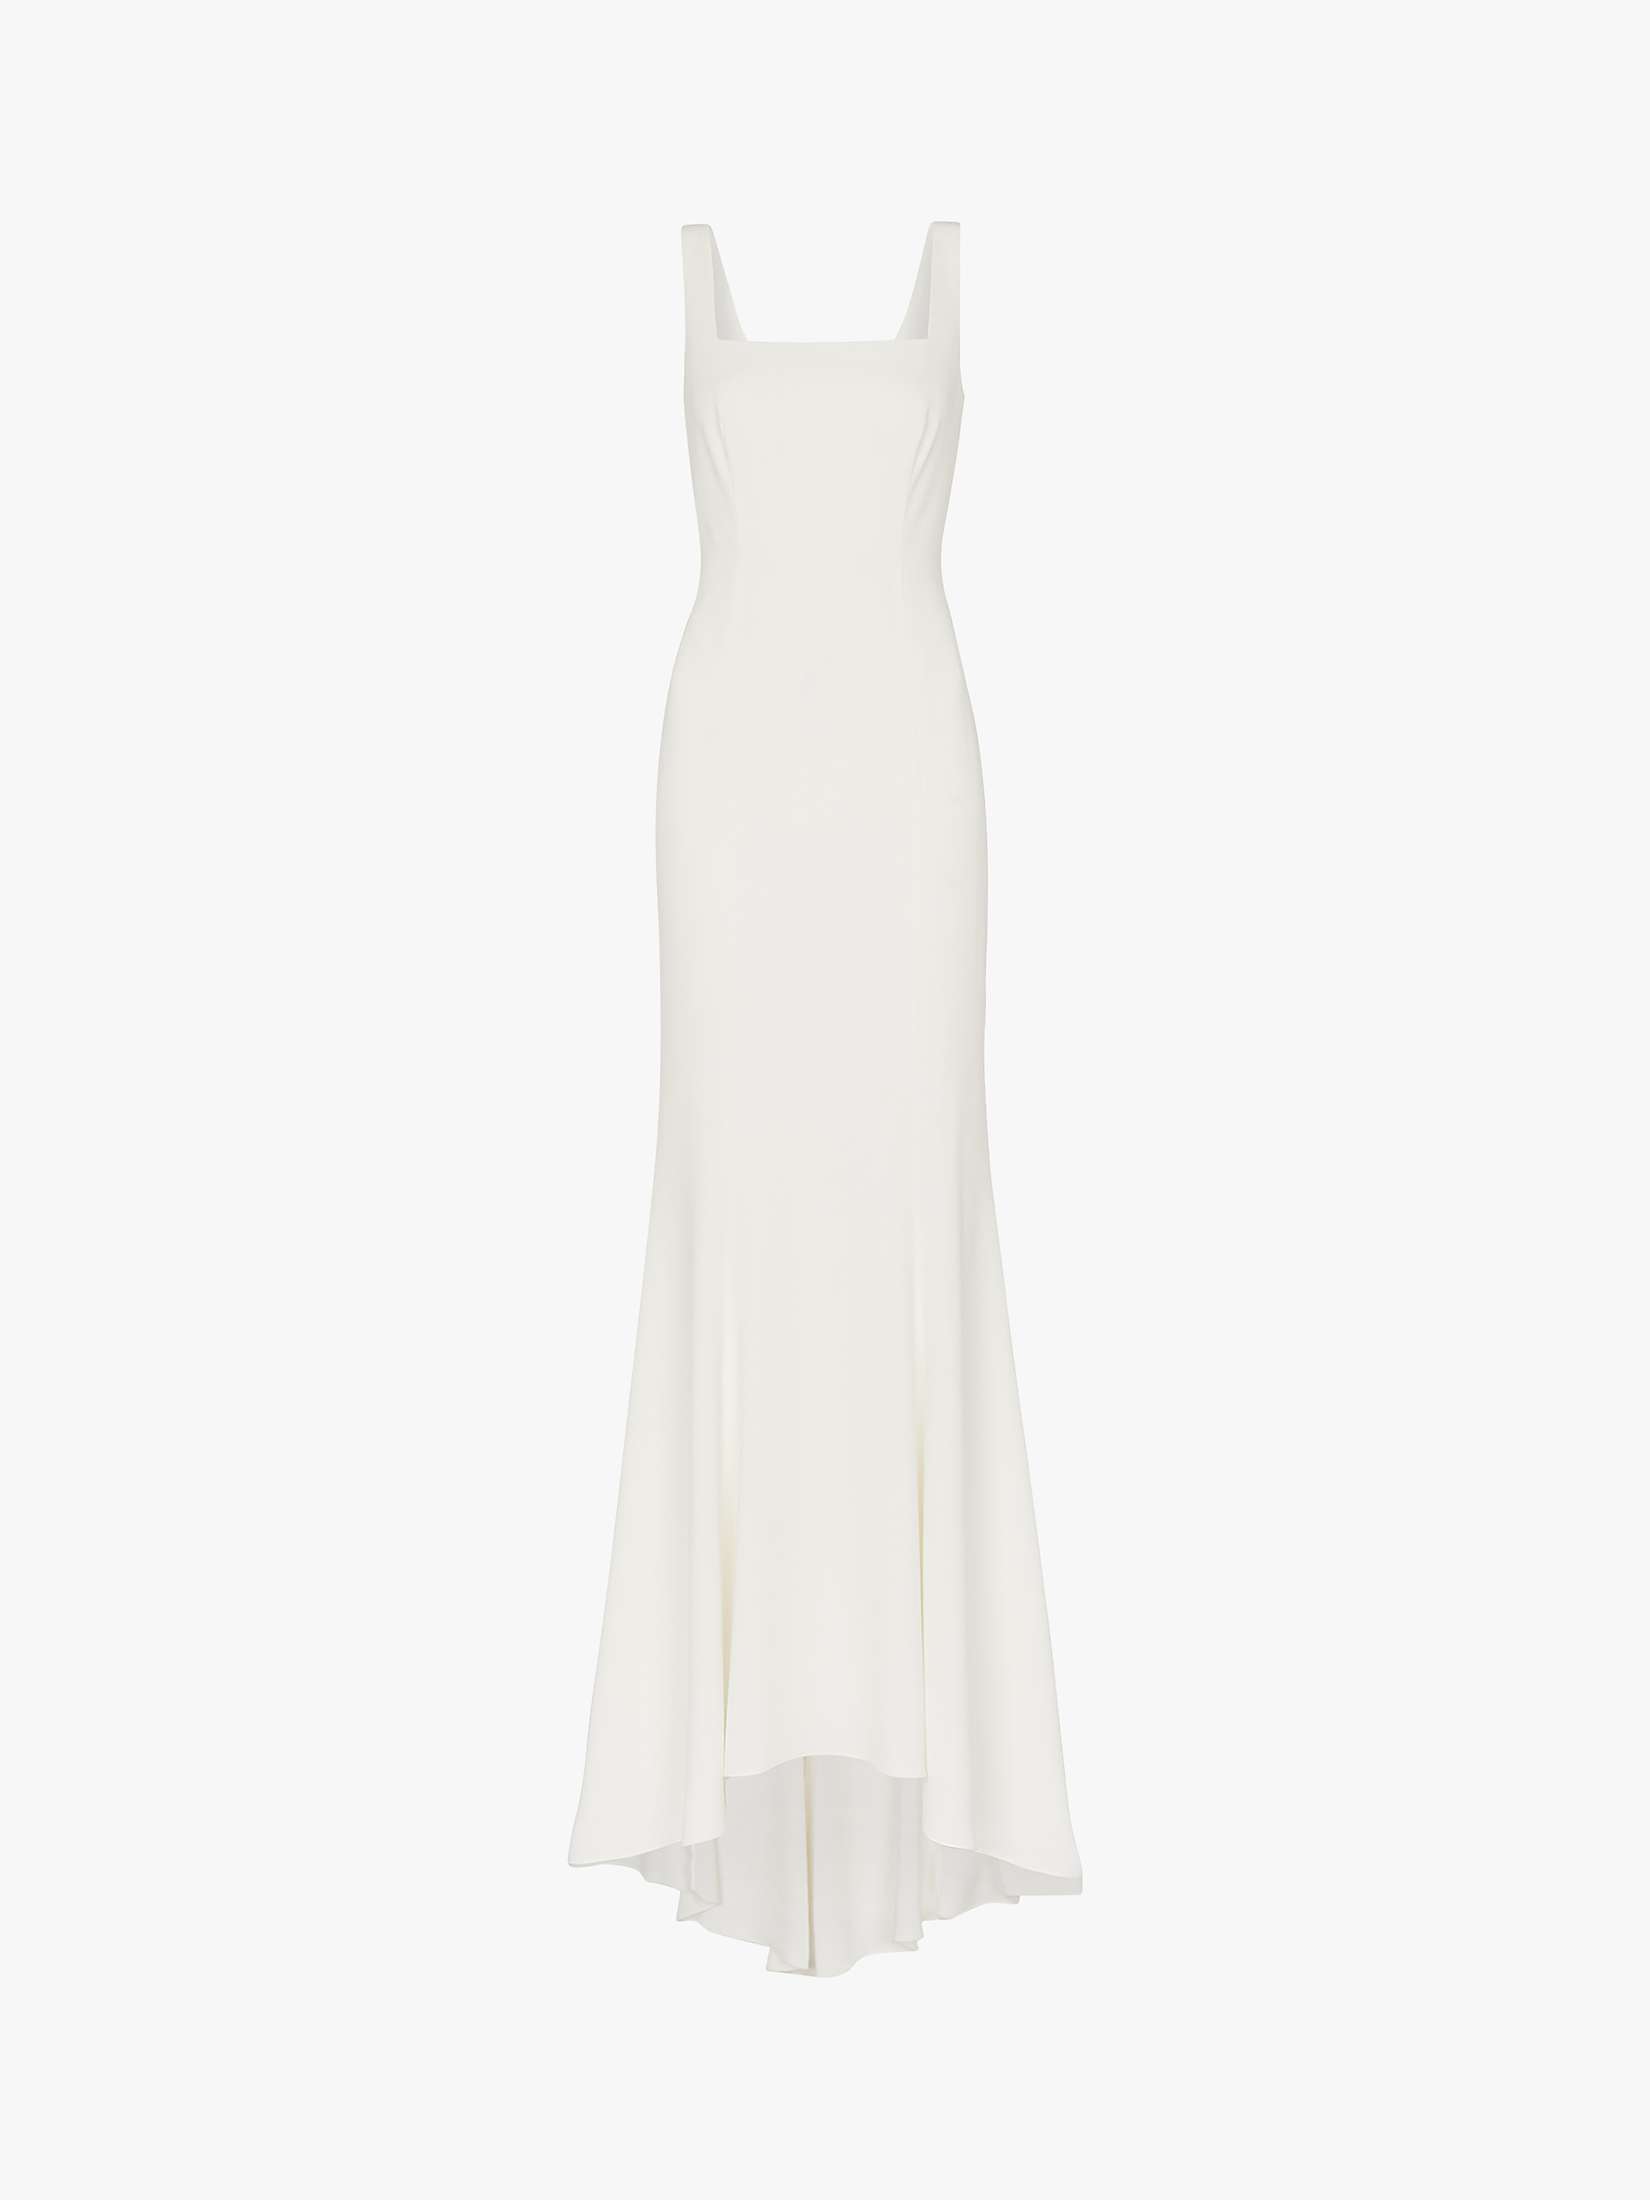 Buy Whistles Square Neck Wedding Dress, Ivory Online at johnlewis.com